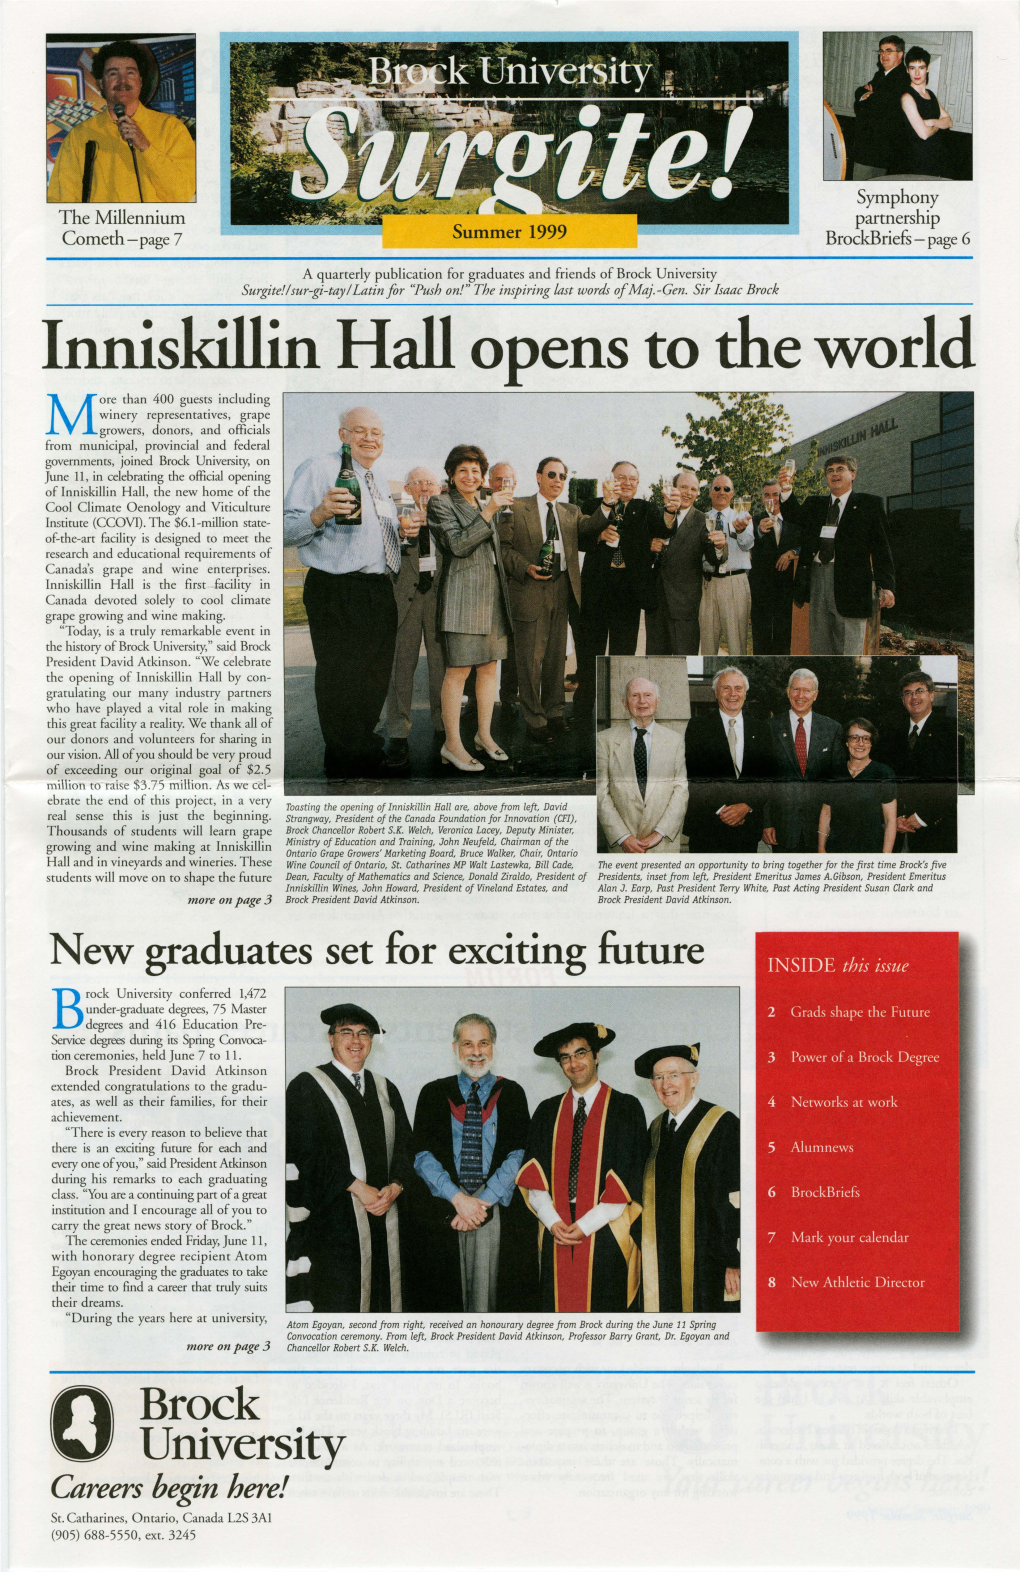 Inniskillin Hall Opens to the World